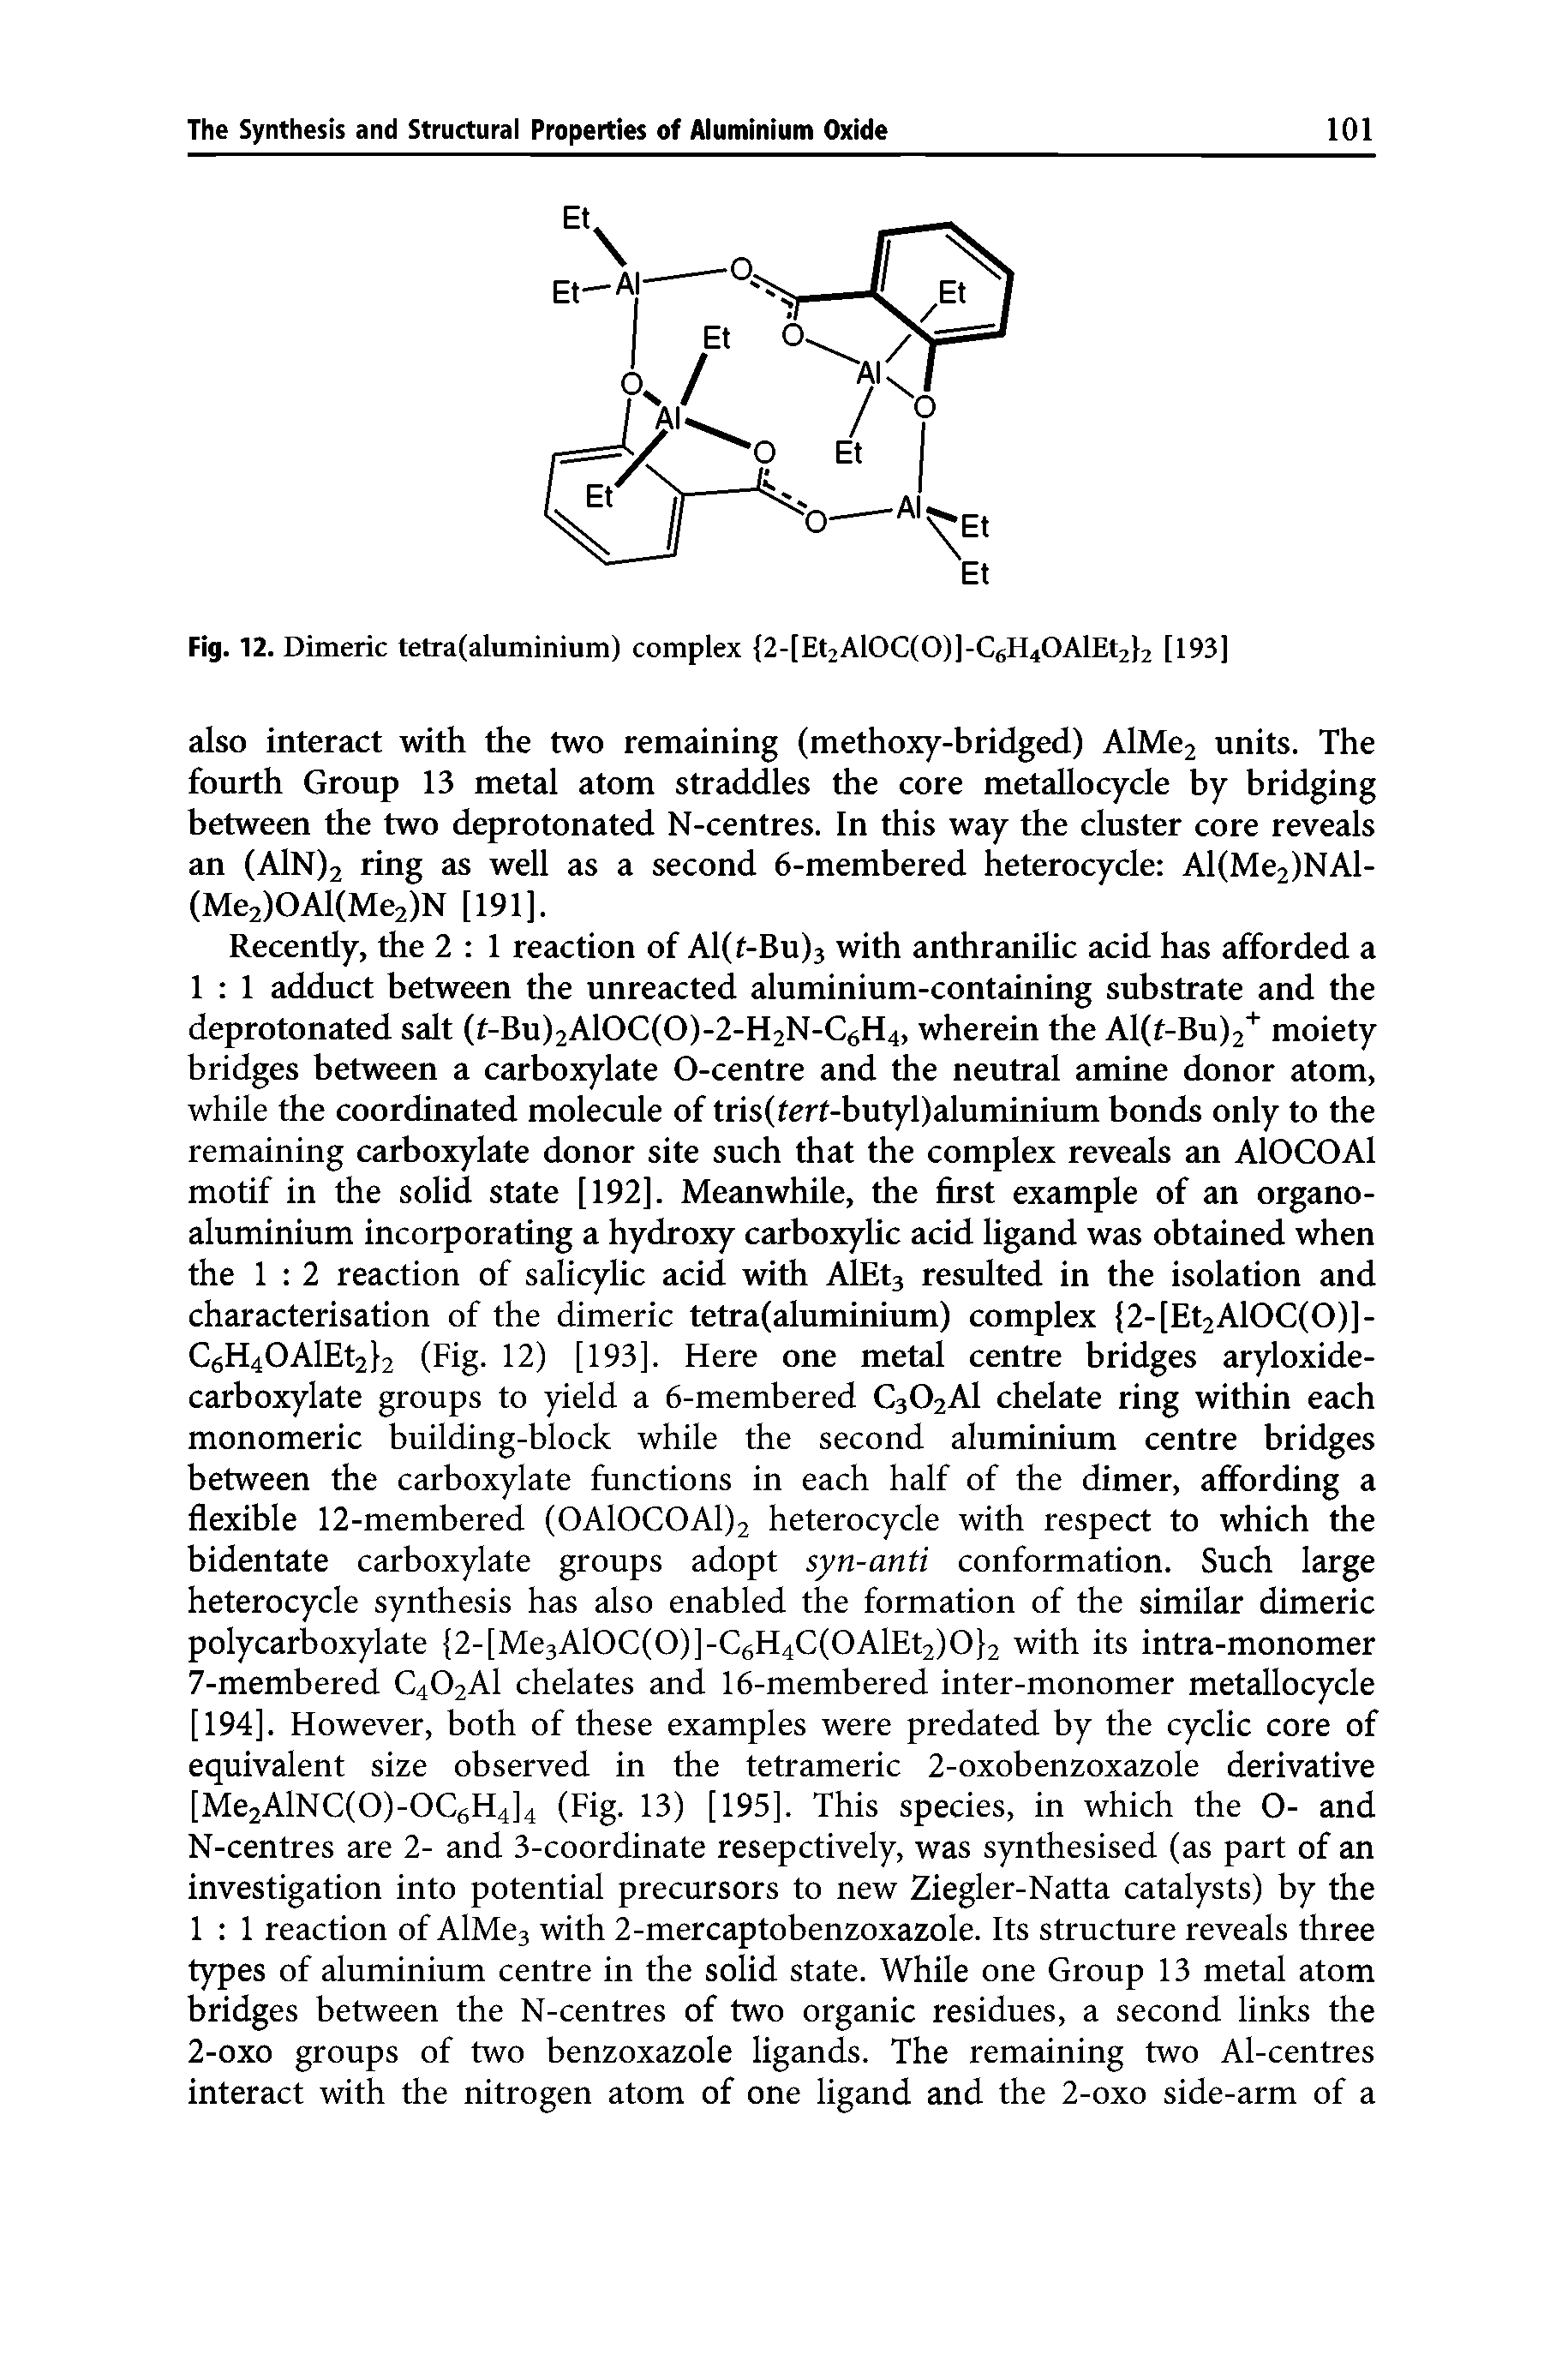 Fig. 12. Dimeric tetra(aluminium) complex 2-[Et2Al0C(0)]-C6H40AlEt2 2 [193]...